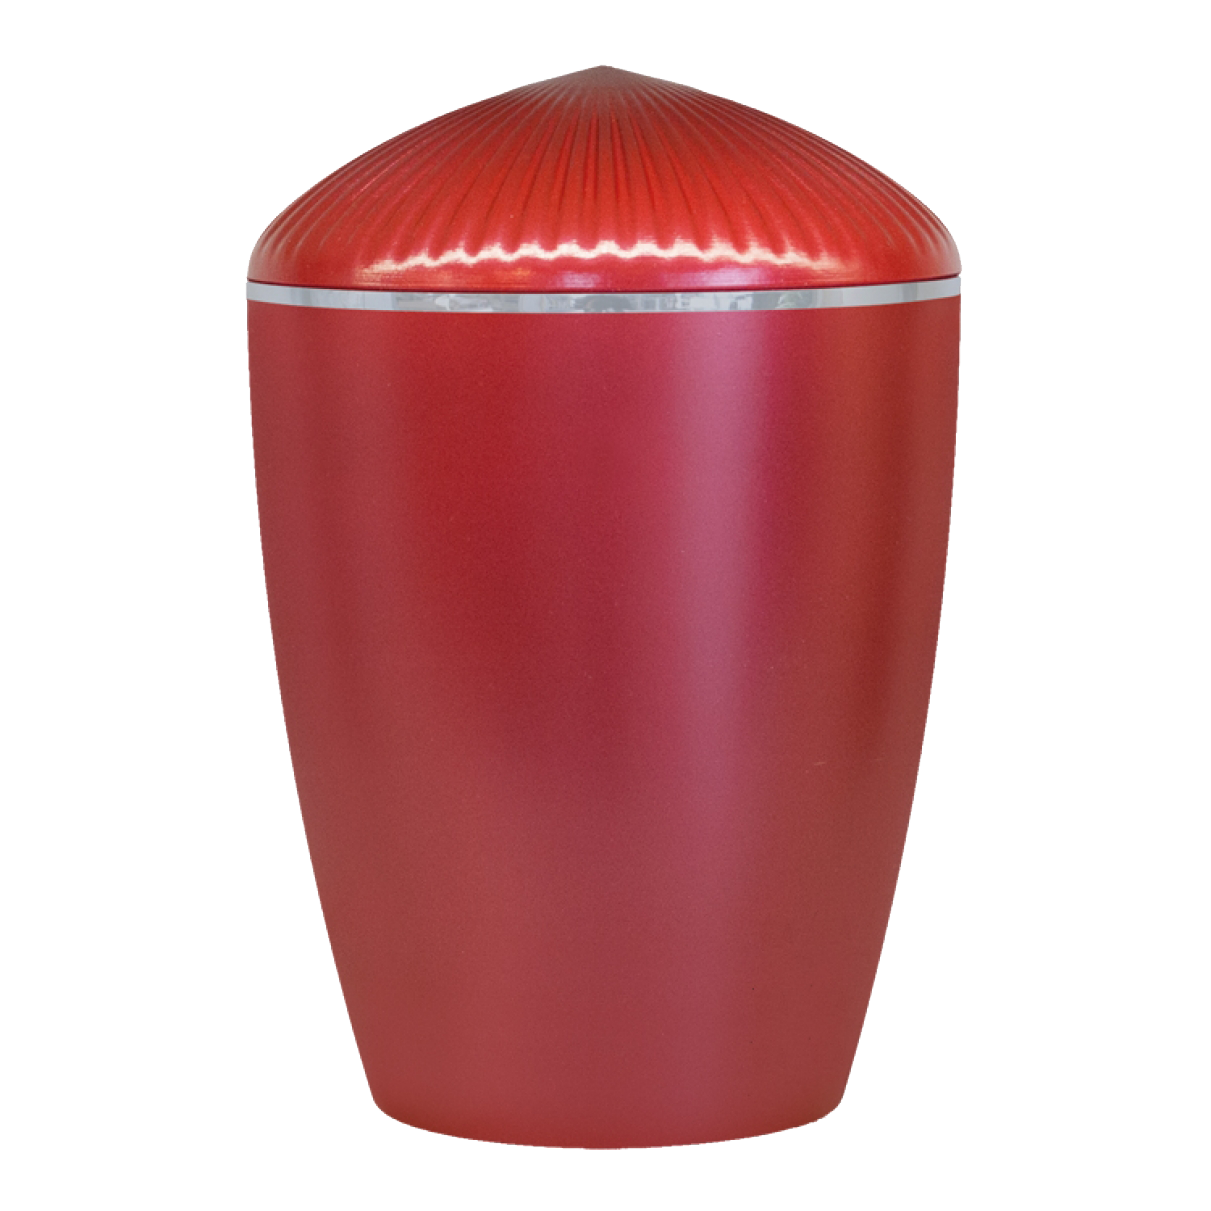 Ferndown Silver Band Cremation Urn – Red